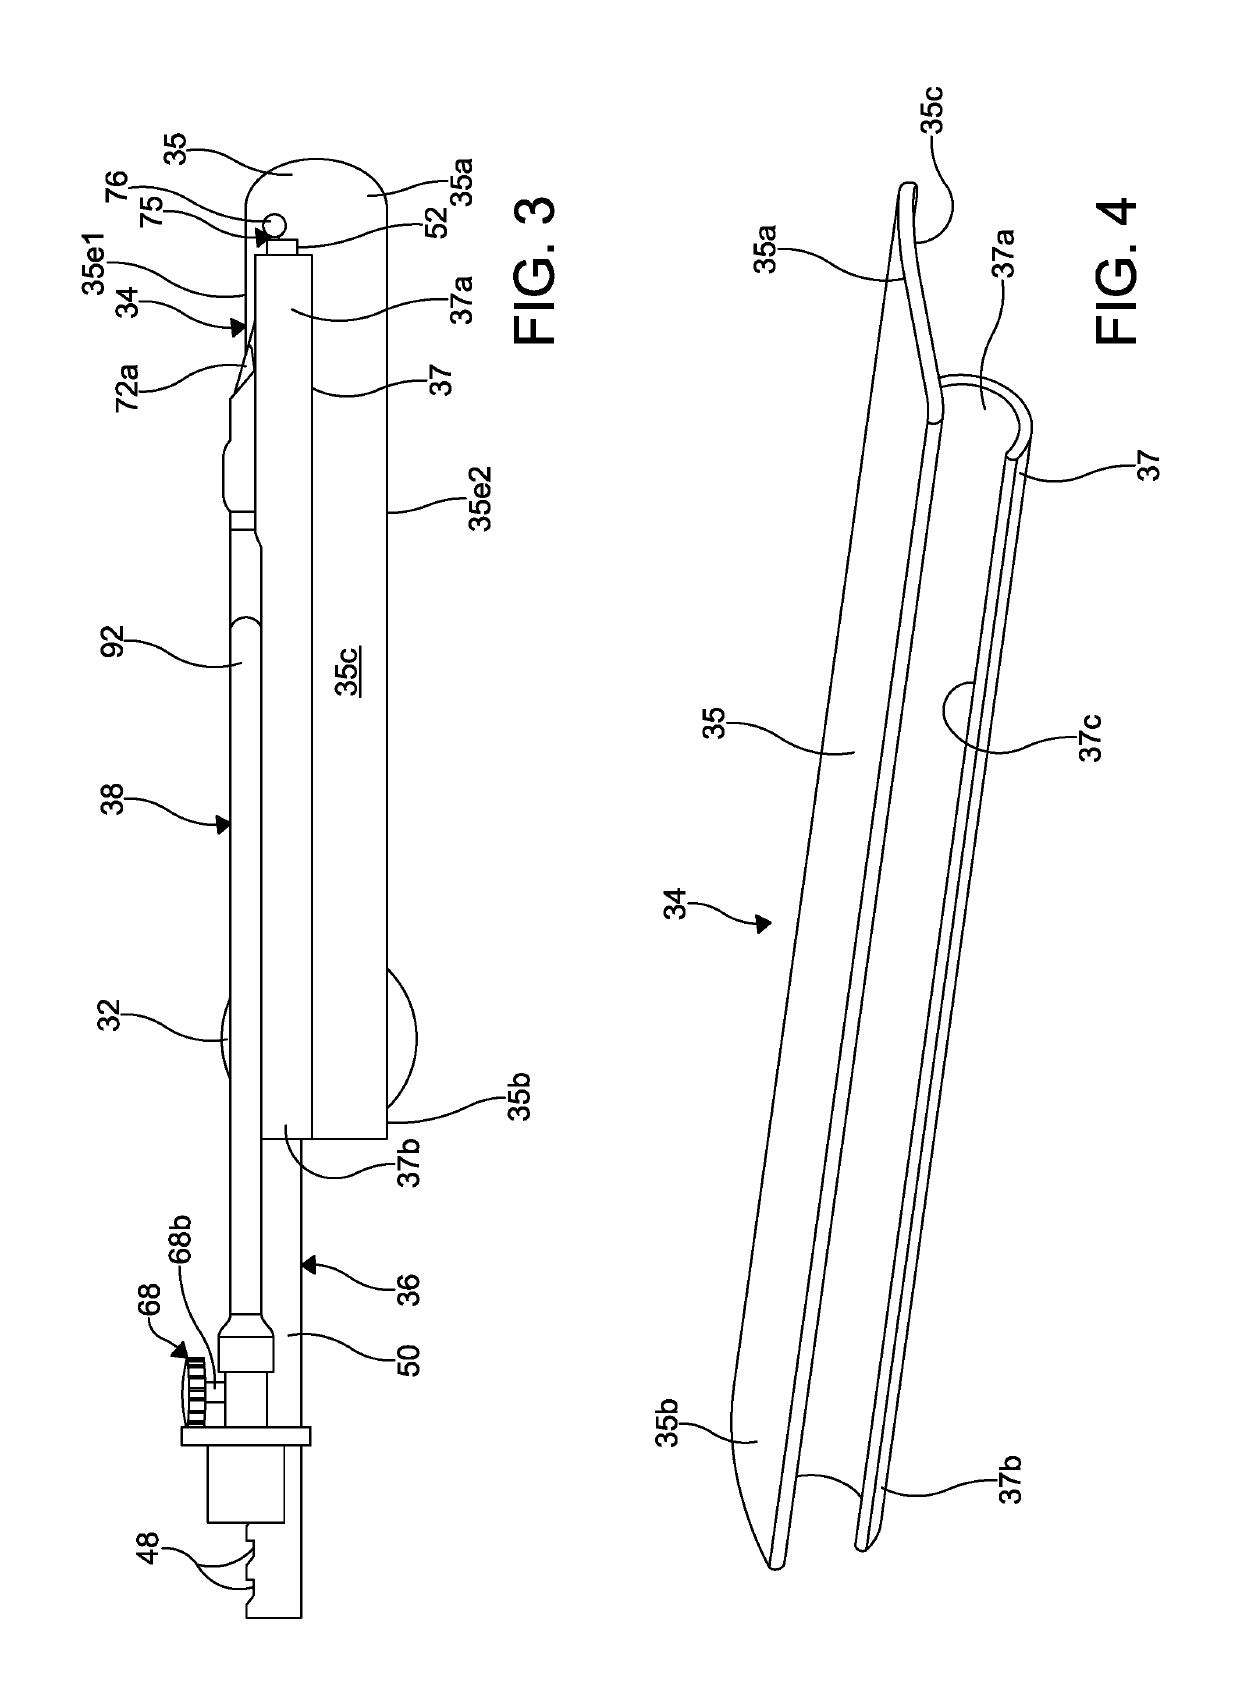 Endotracheal tube insertion device